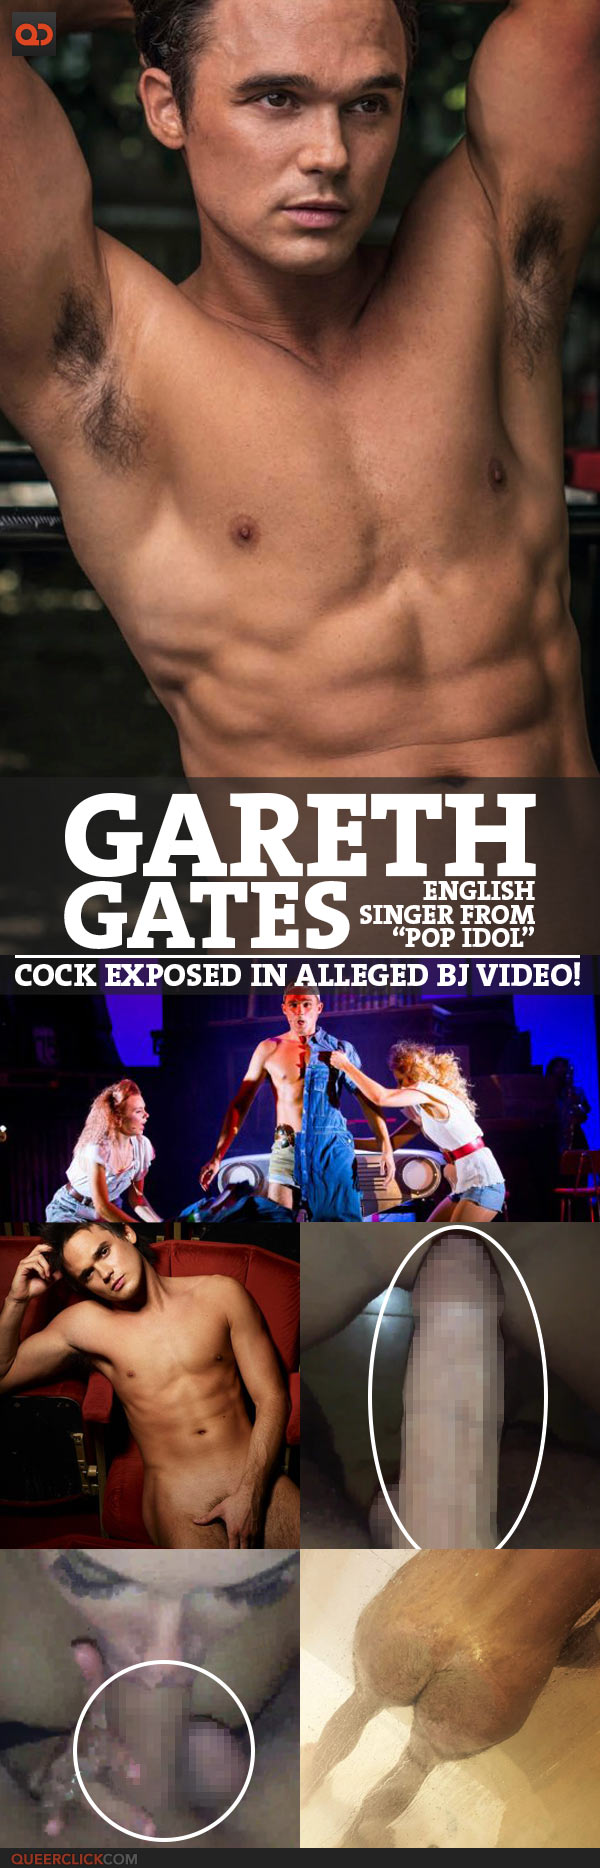 Gareth Gates, English Singer From “pop Idol”, Cock